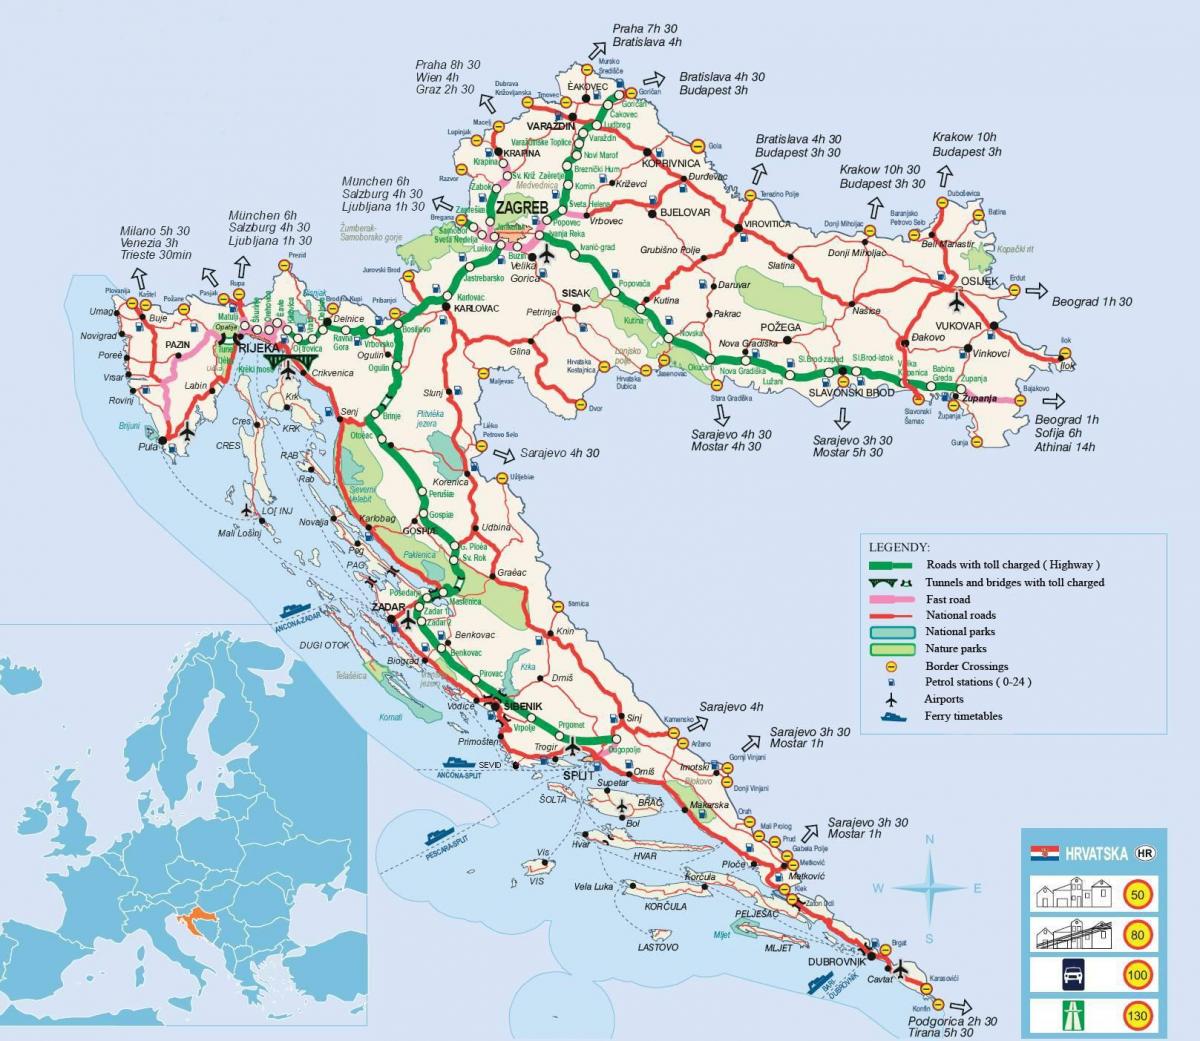 Driving map of Croatia